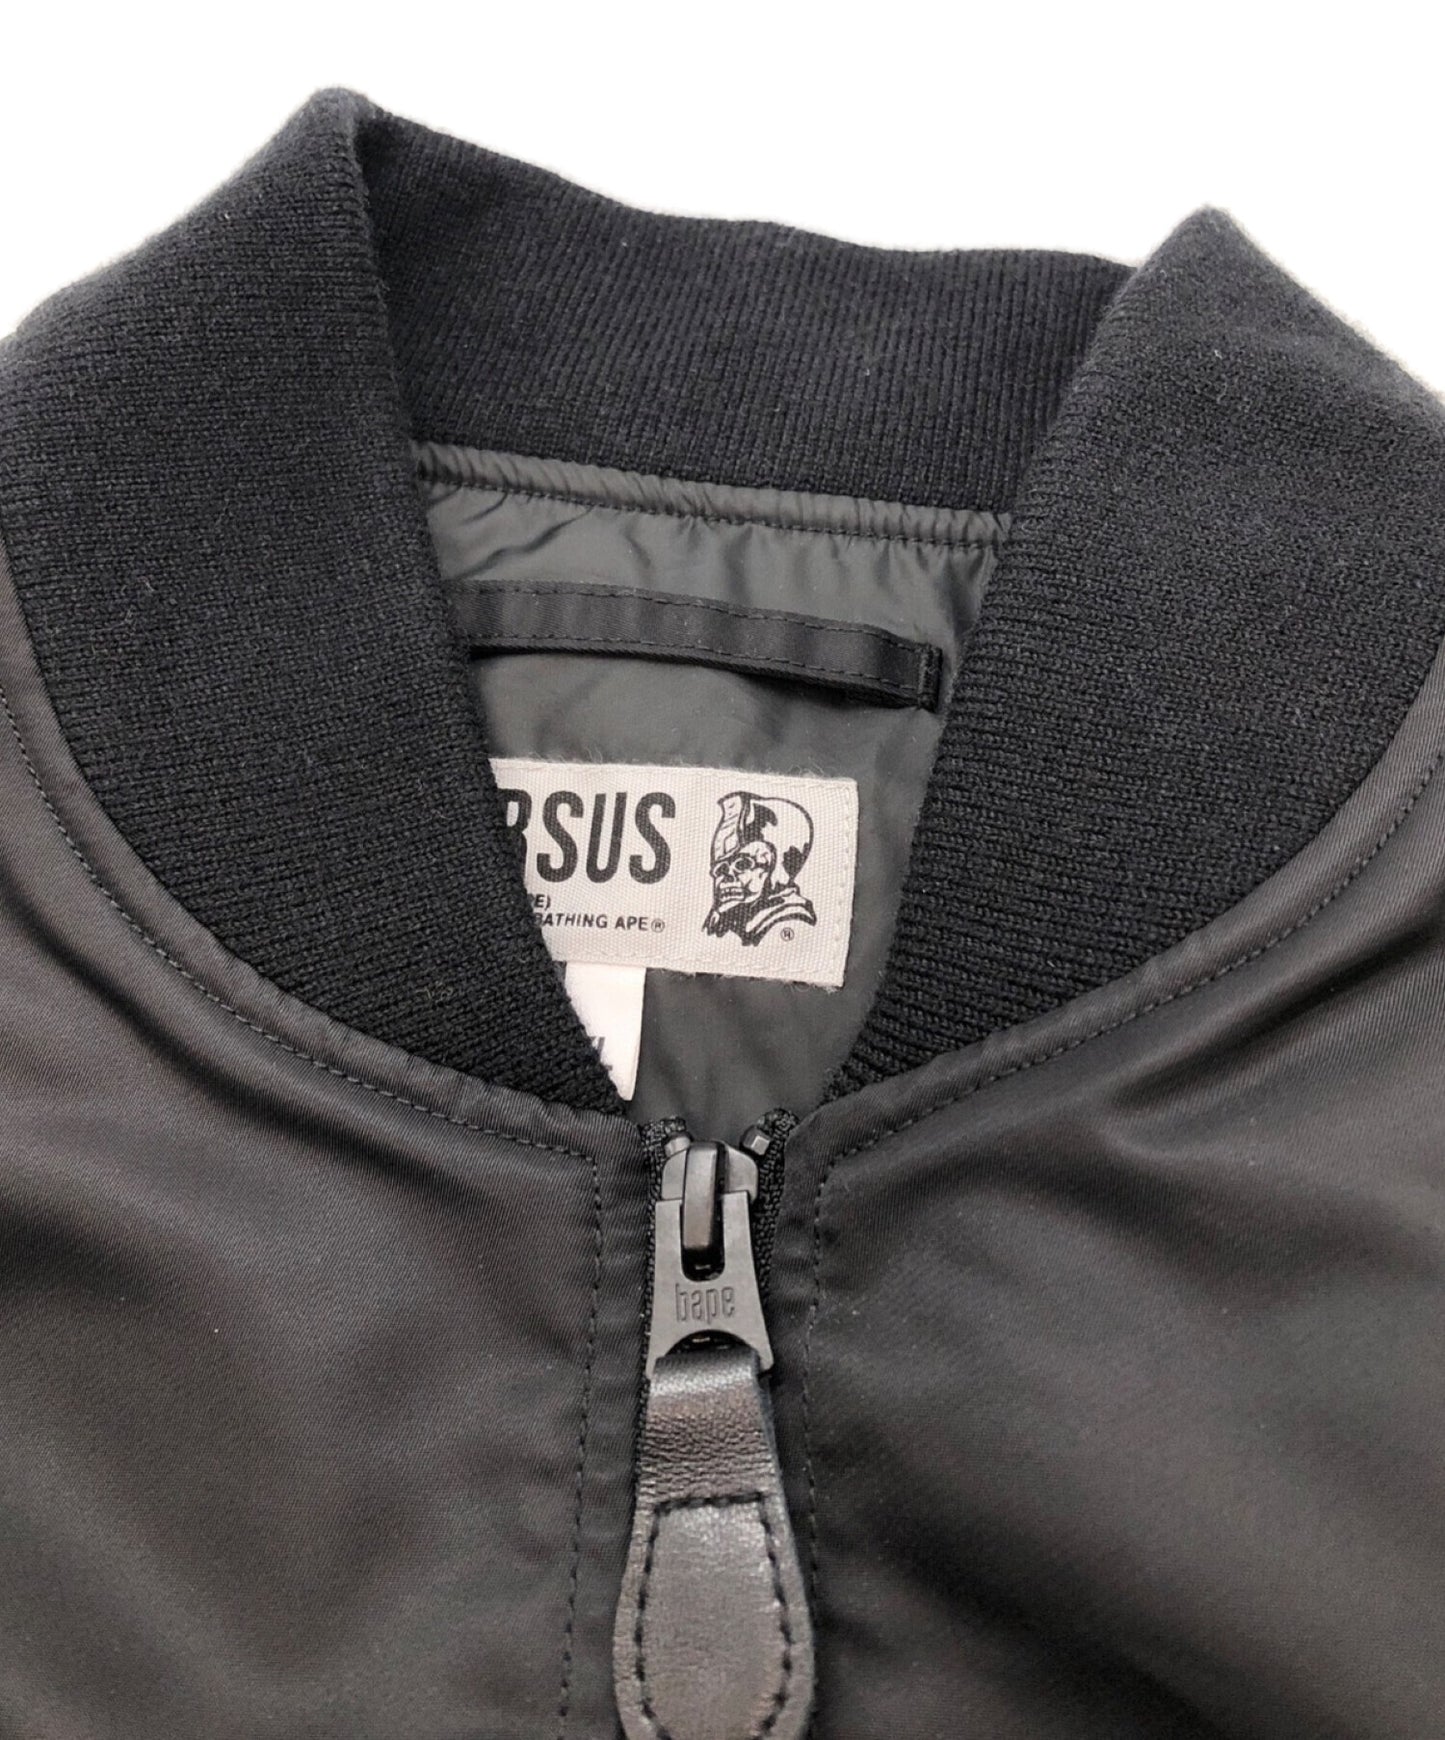 [Pre-owned] URSUS BAPE Ursus Nylon Loose Fit MA-1 Jacket 1H70141008